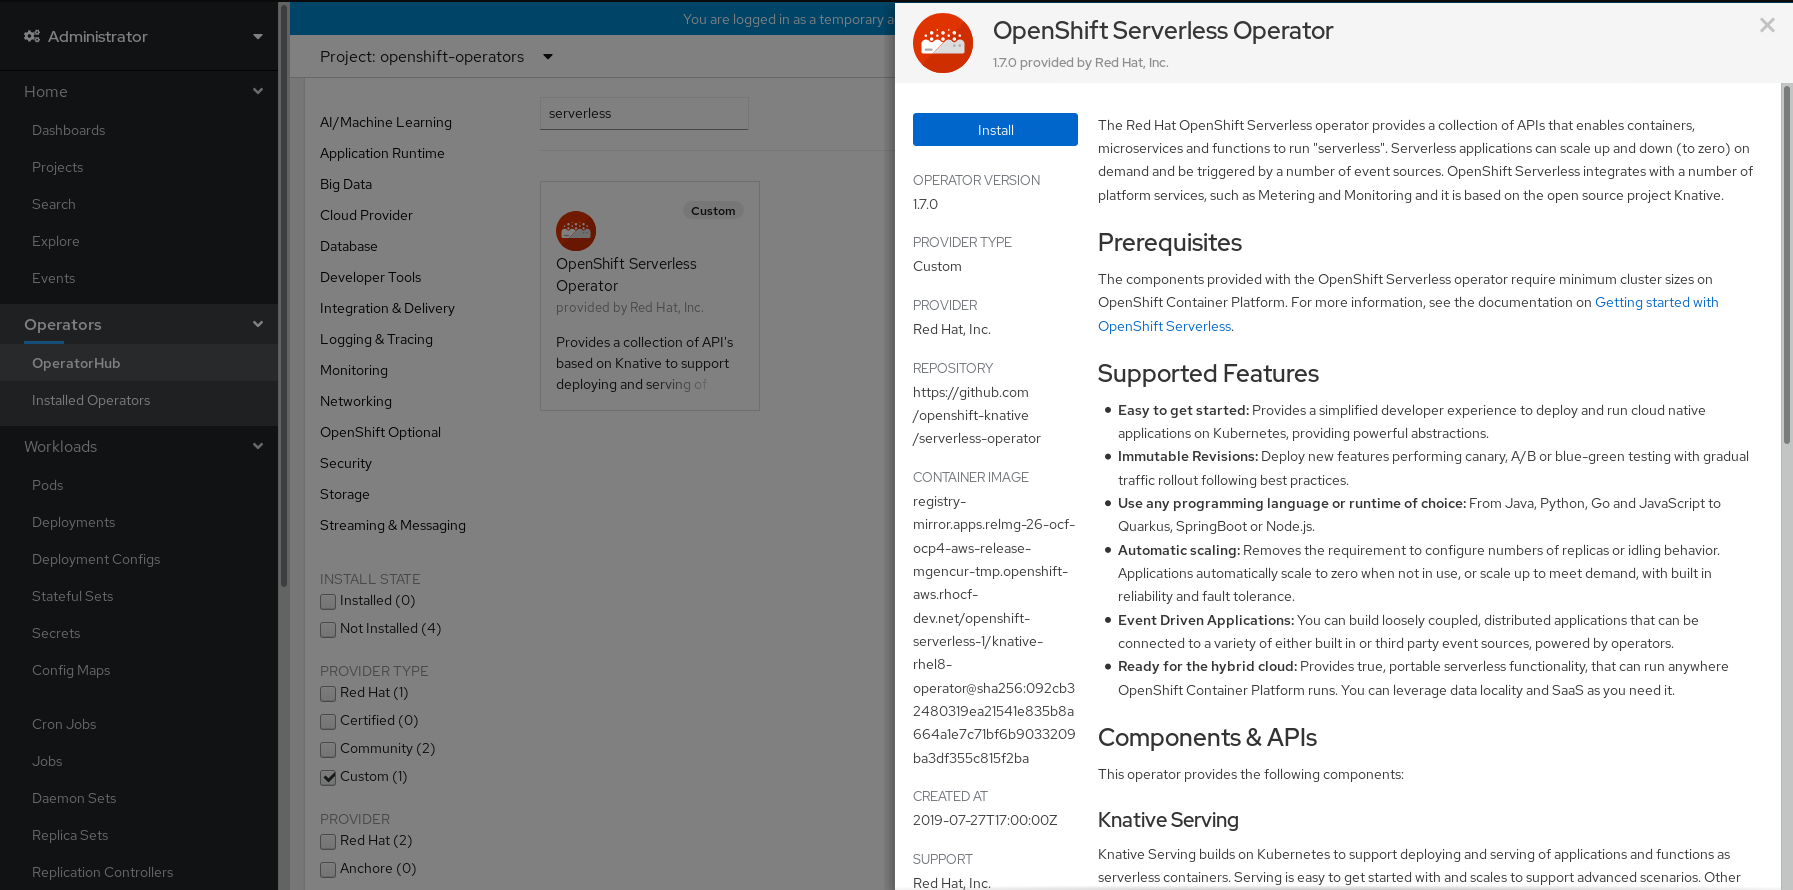 OpenShift Serverless Operator information